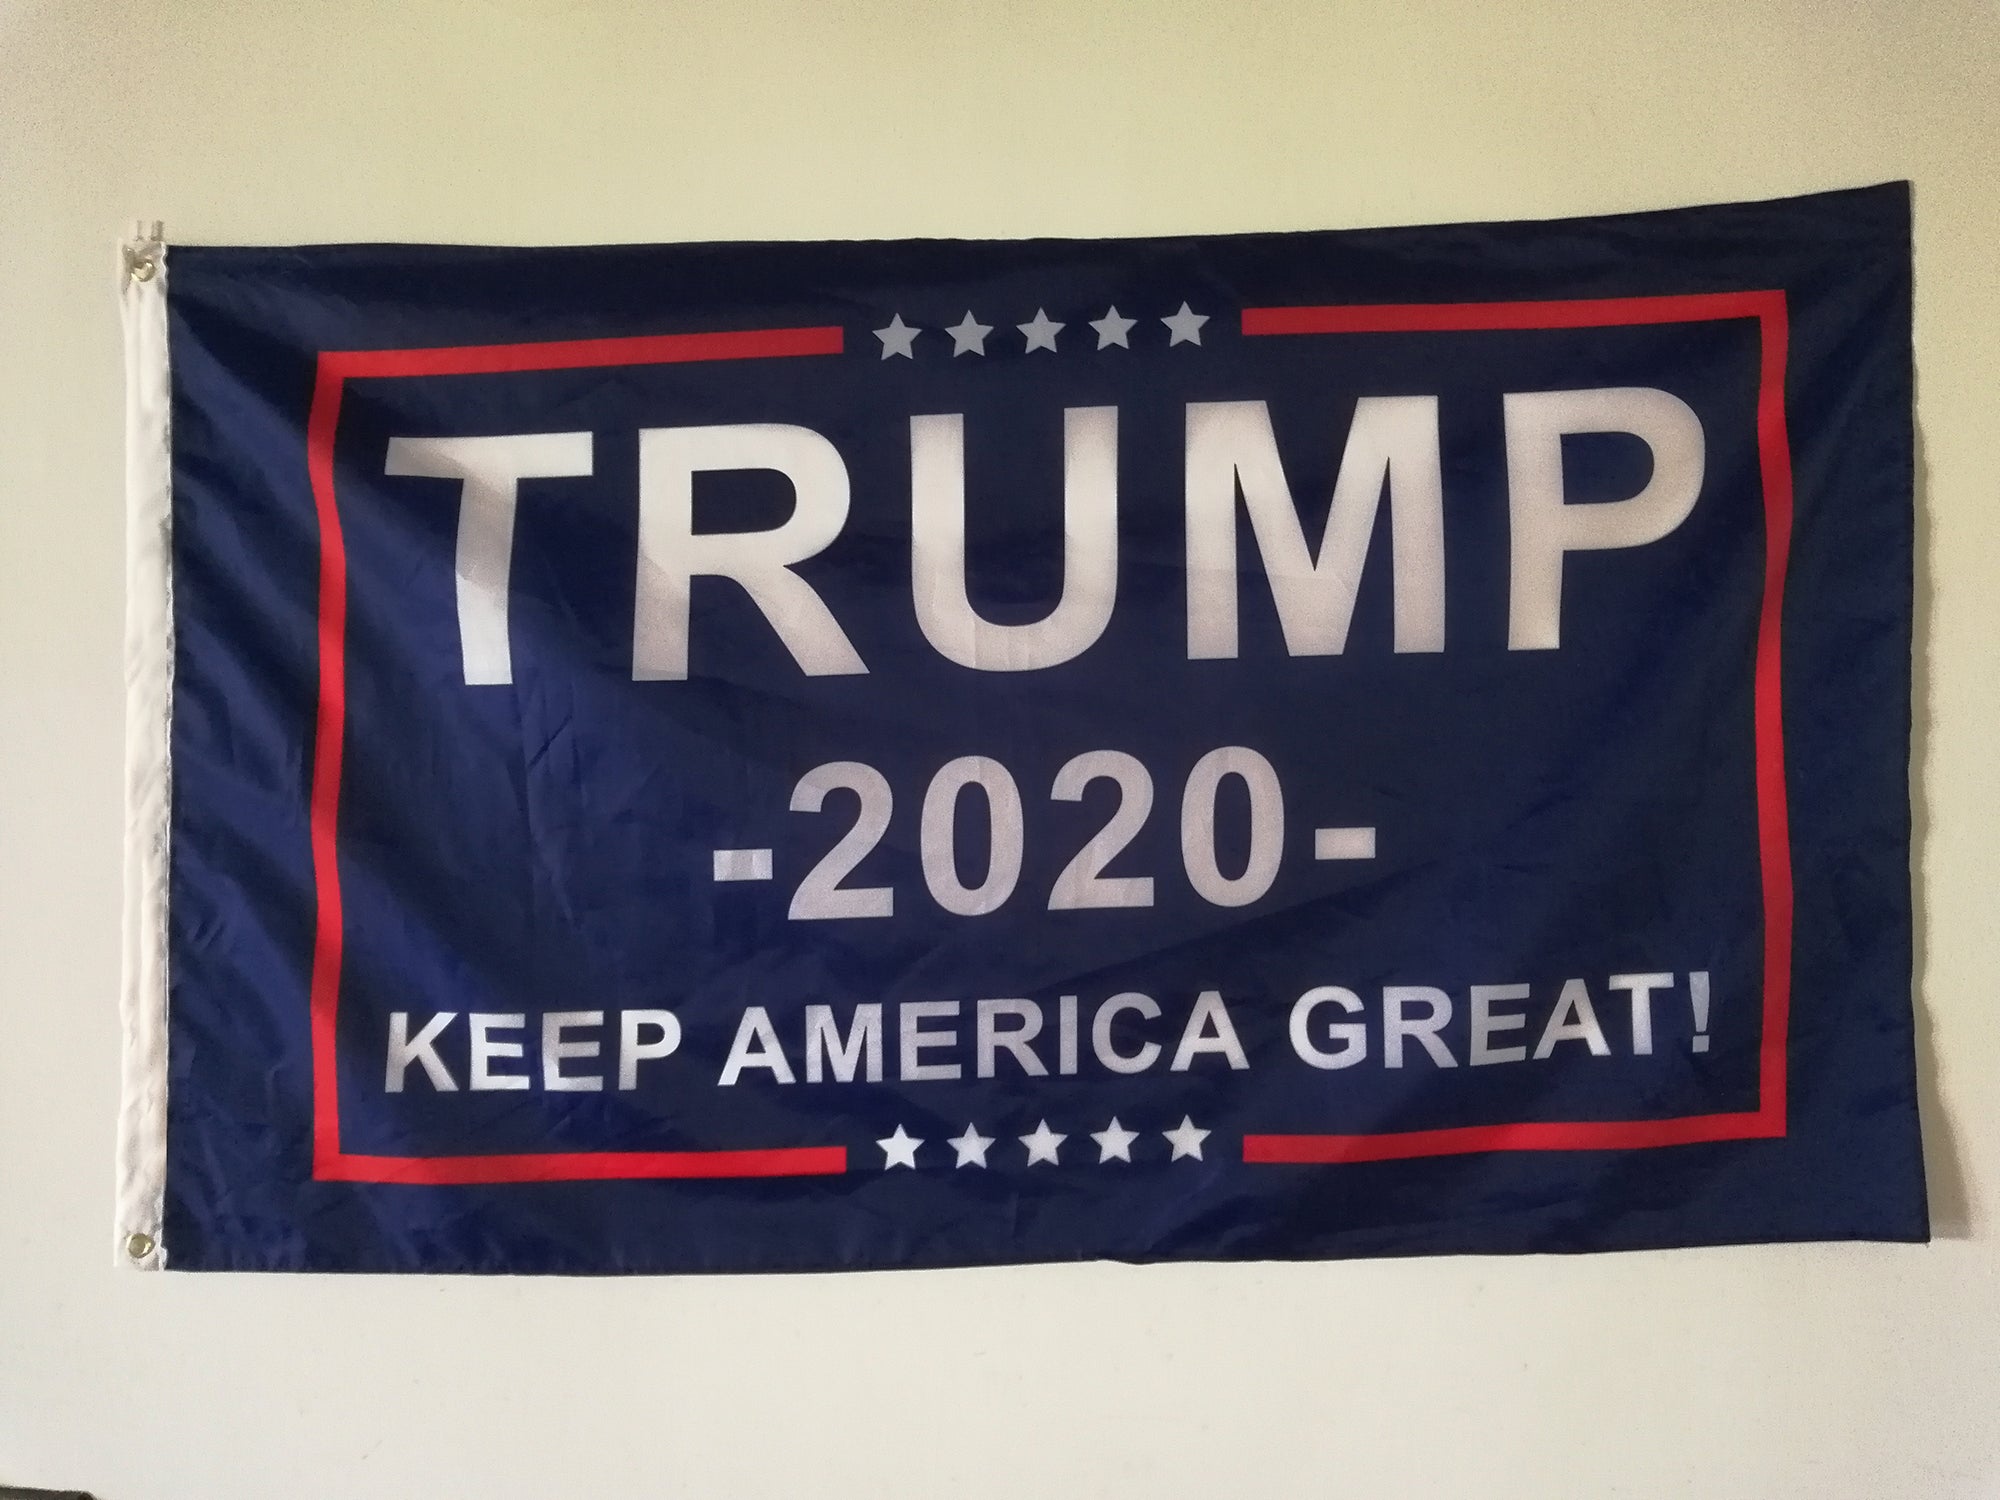 FREE Trump Flags - 2020 & MAGA